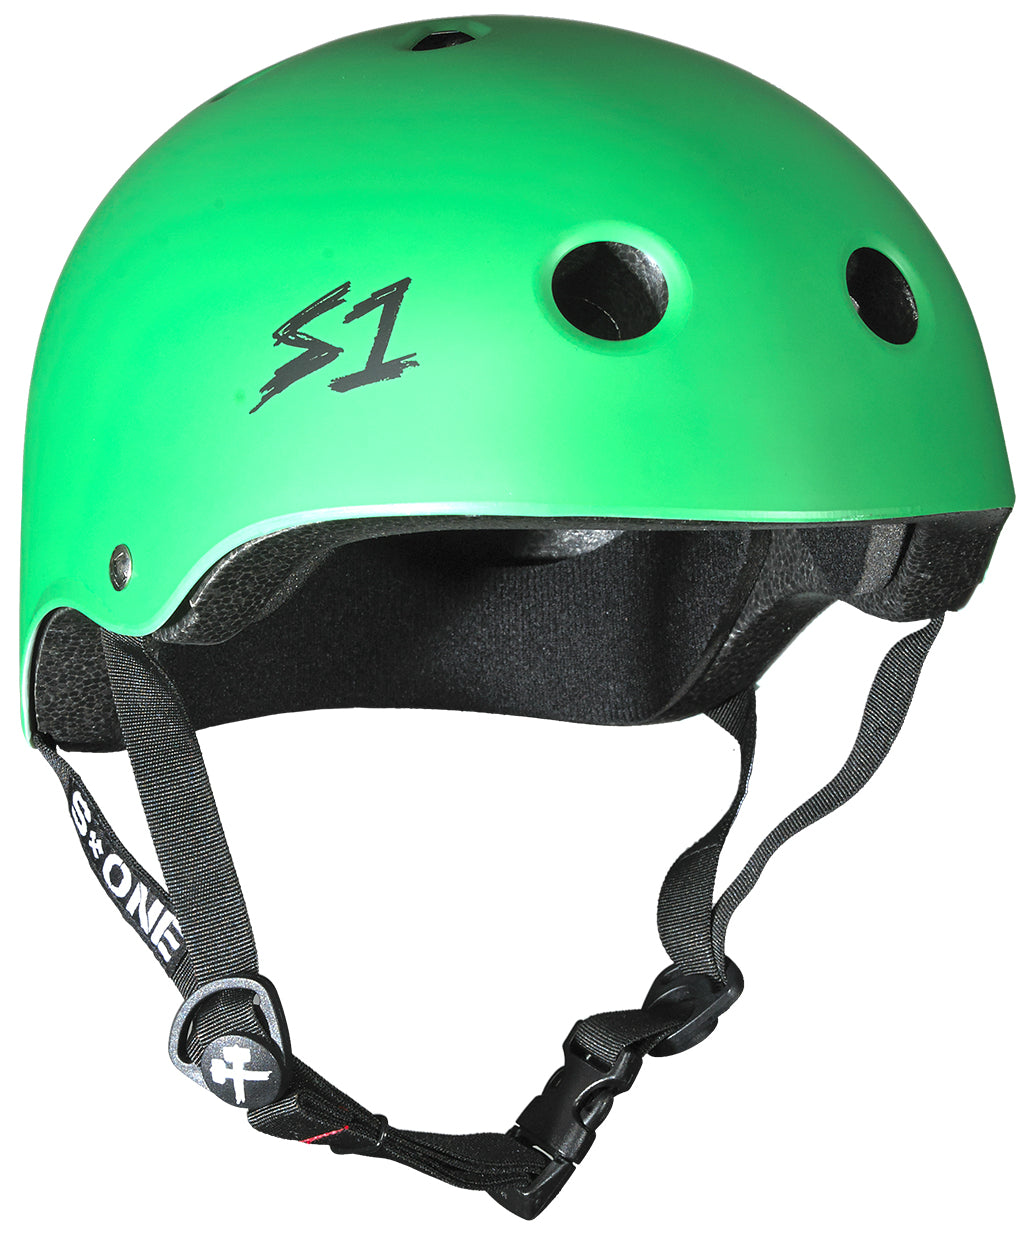 S1 Lifer Helmet - Casque Vert Kelly mât avec sangles noires